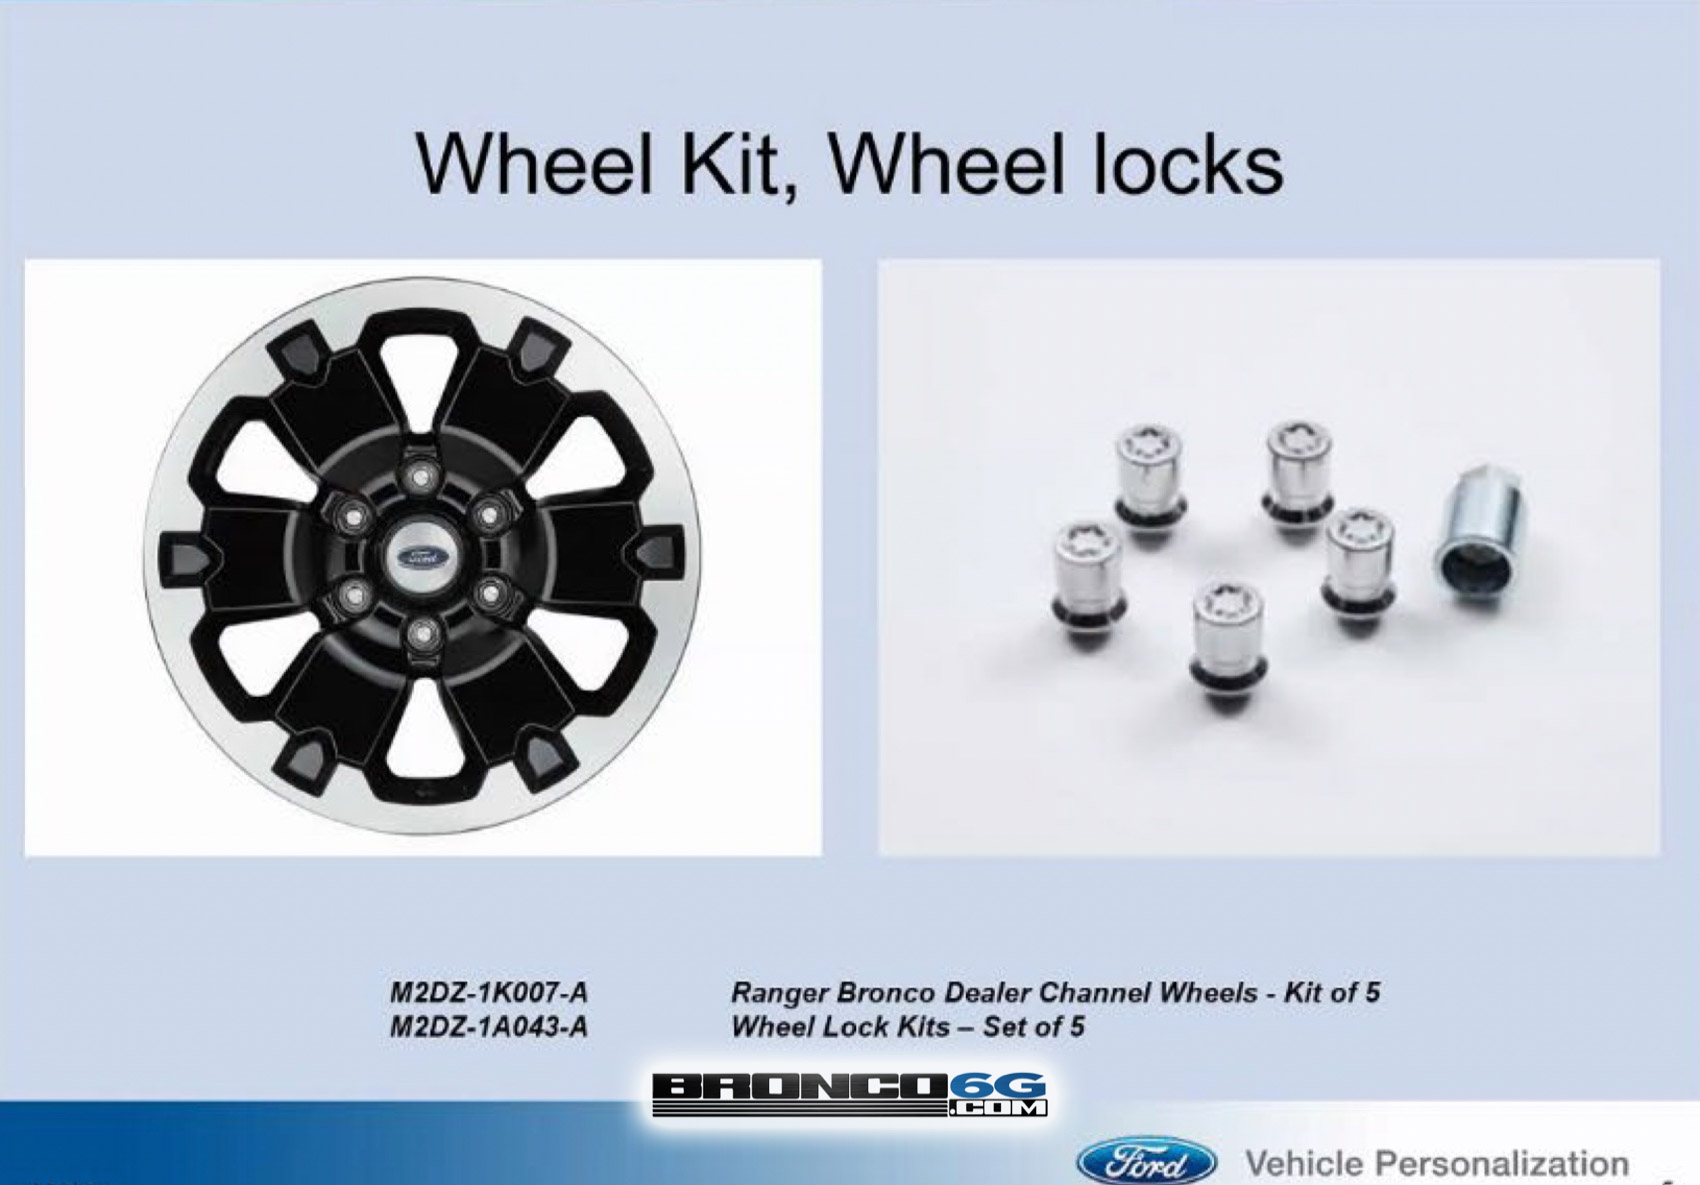 2021 Bronco wheel kit wheel locks Ford Performance OEM factory accessory.jpg